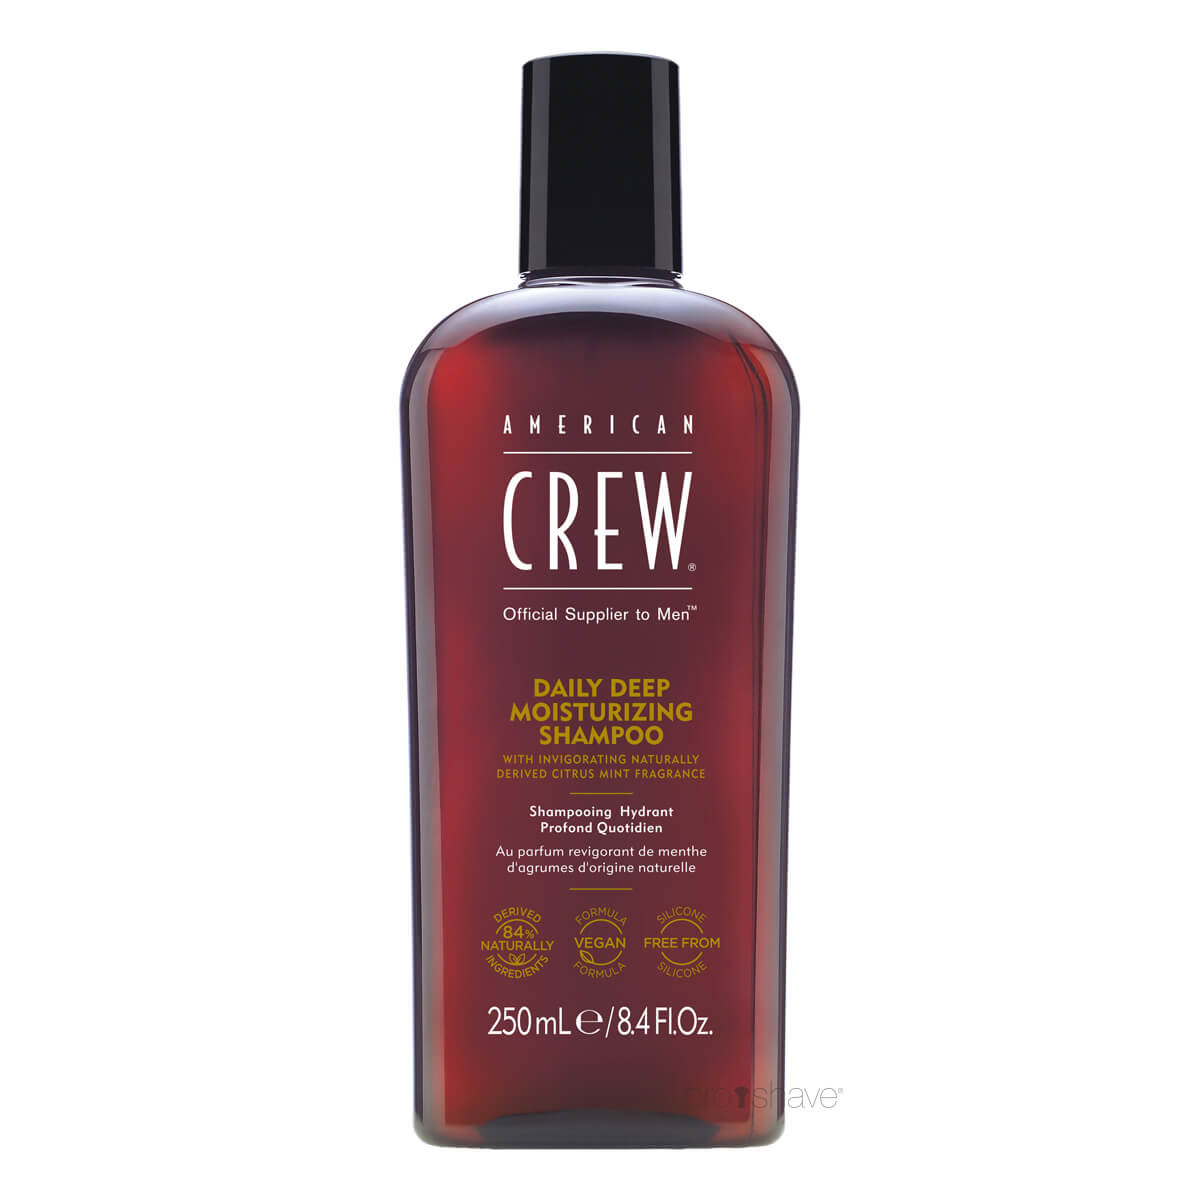 American Crew Daily Deep Moisturizing Shampoo, 250 ml.